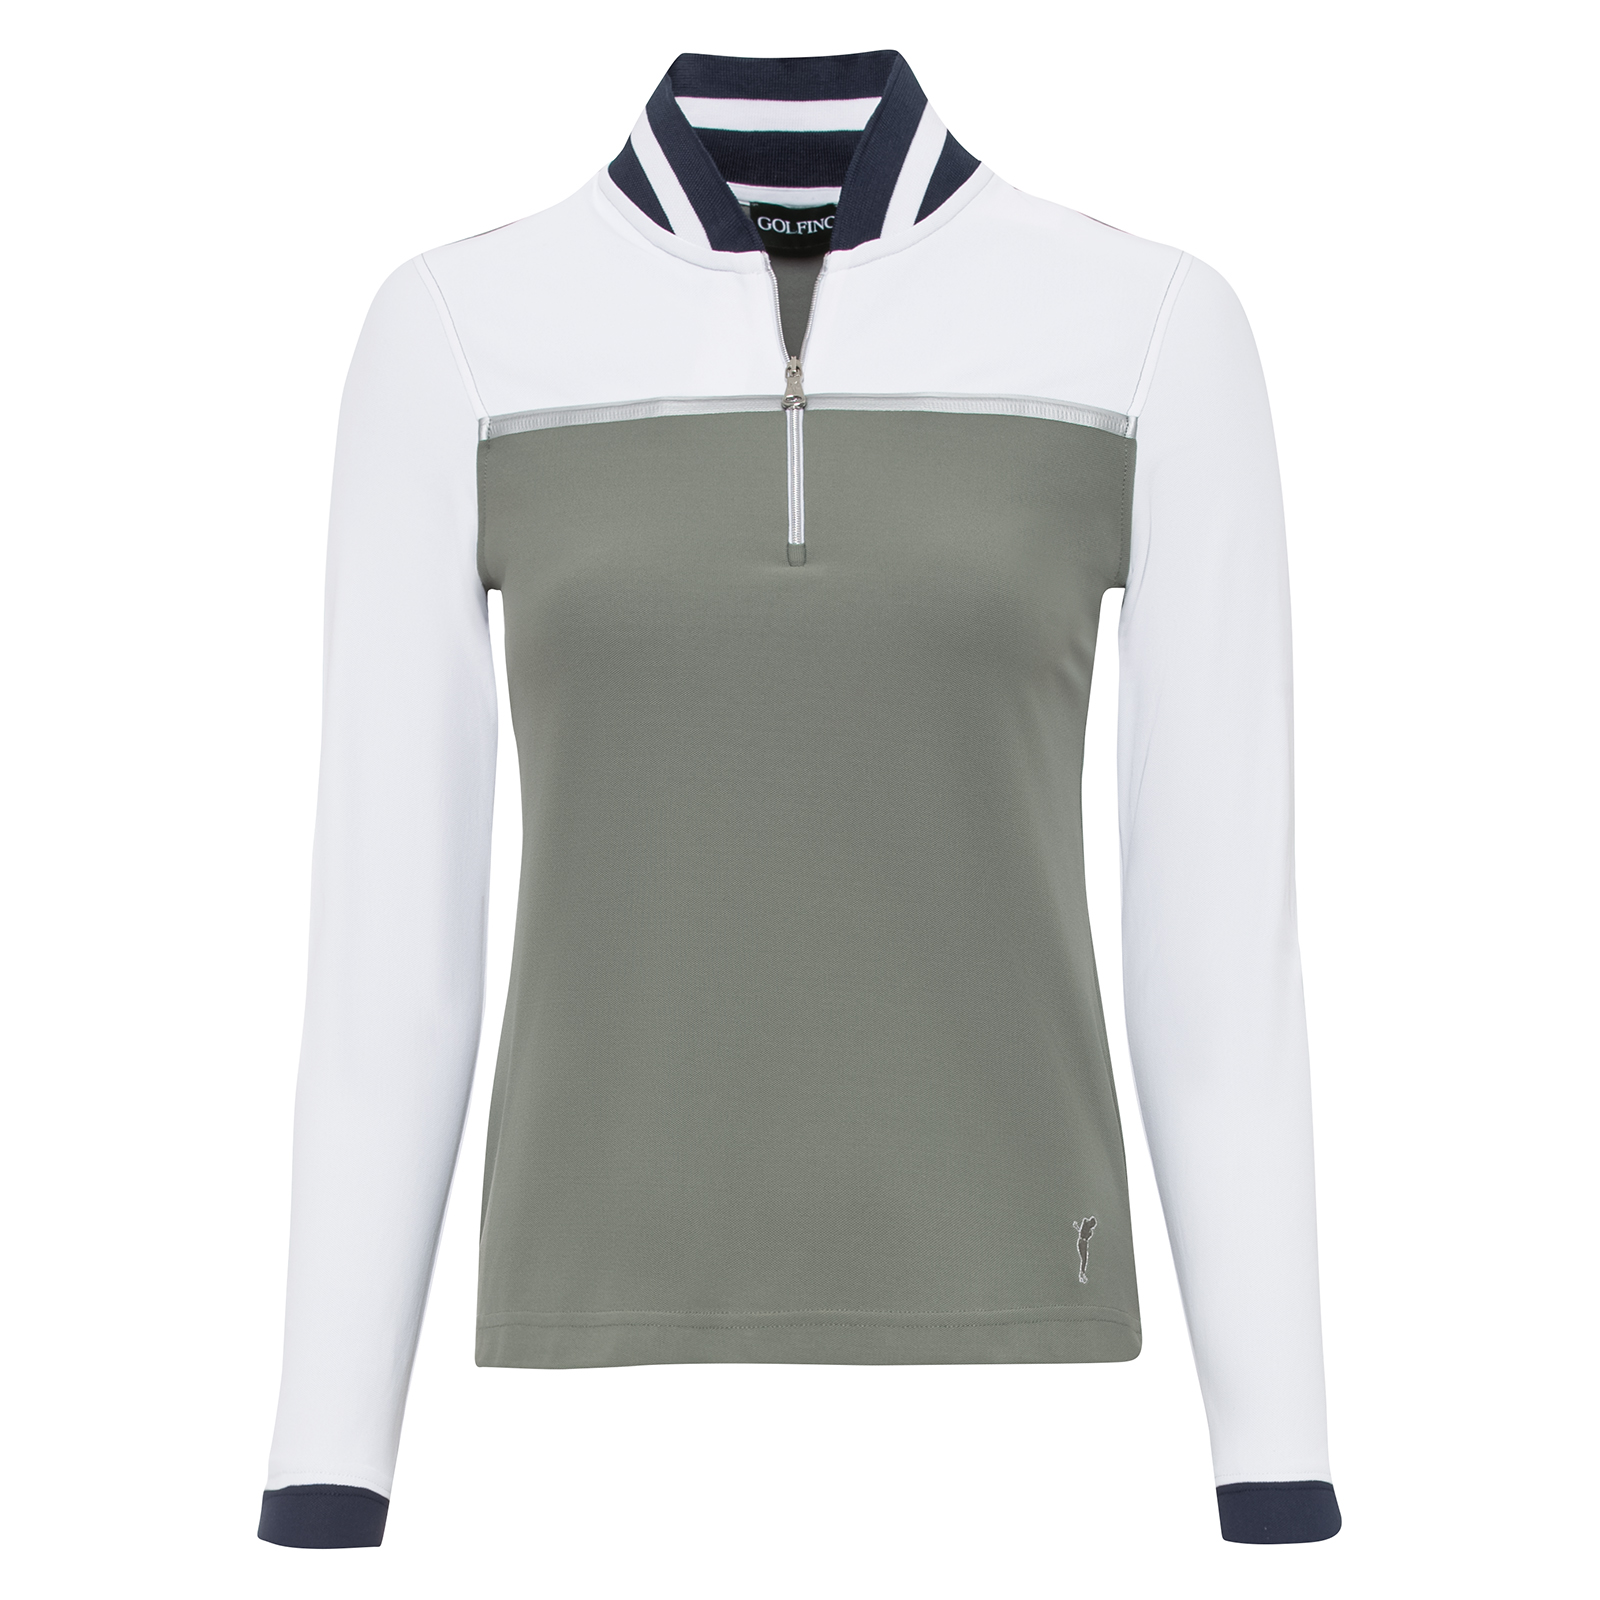 Ladies' moisture-wicking long-sleeved golf shirt in elegant colour blocking design 